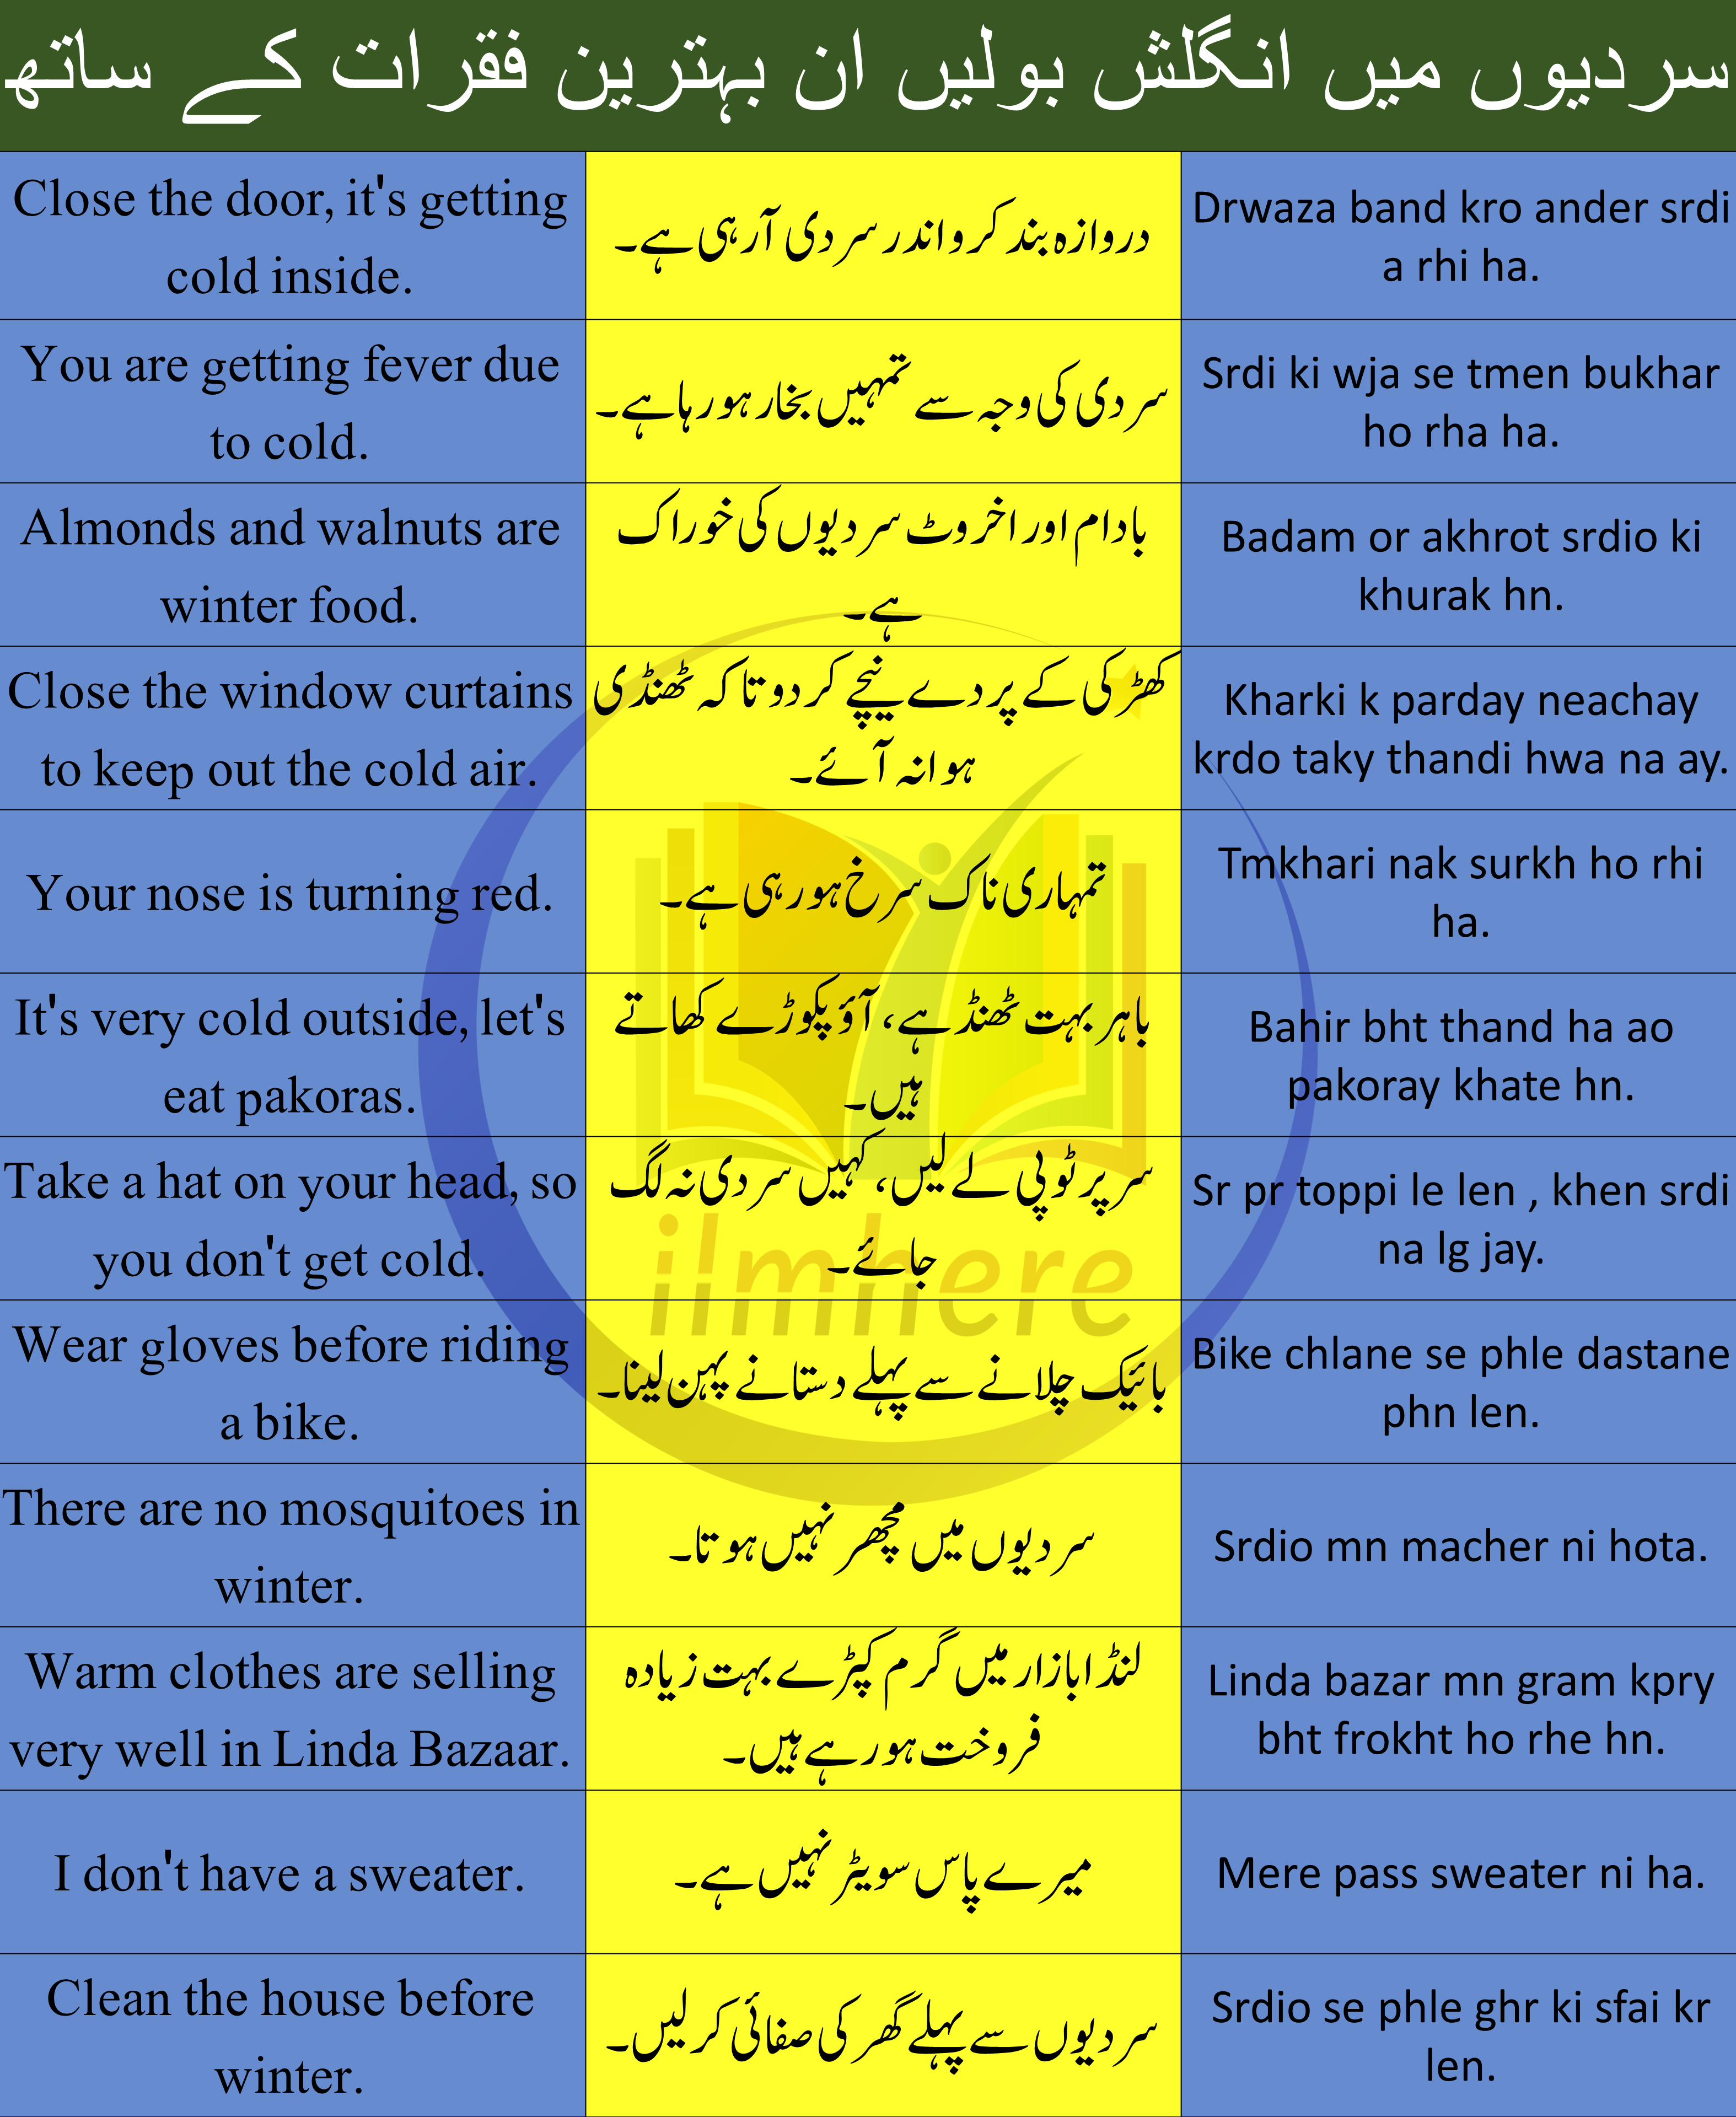 List 3 - English To Urdu Sentences For Winter Season